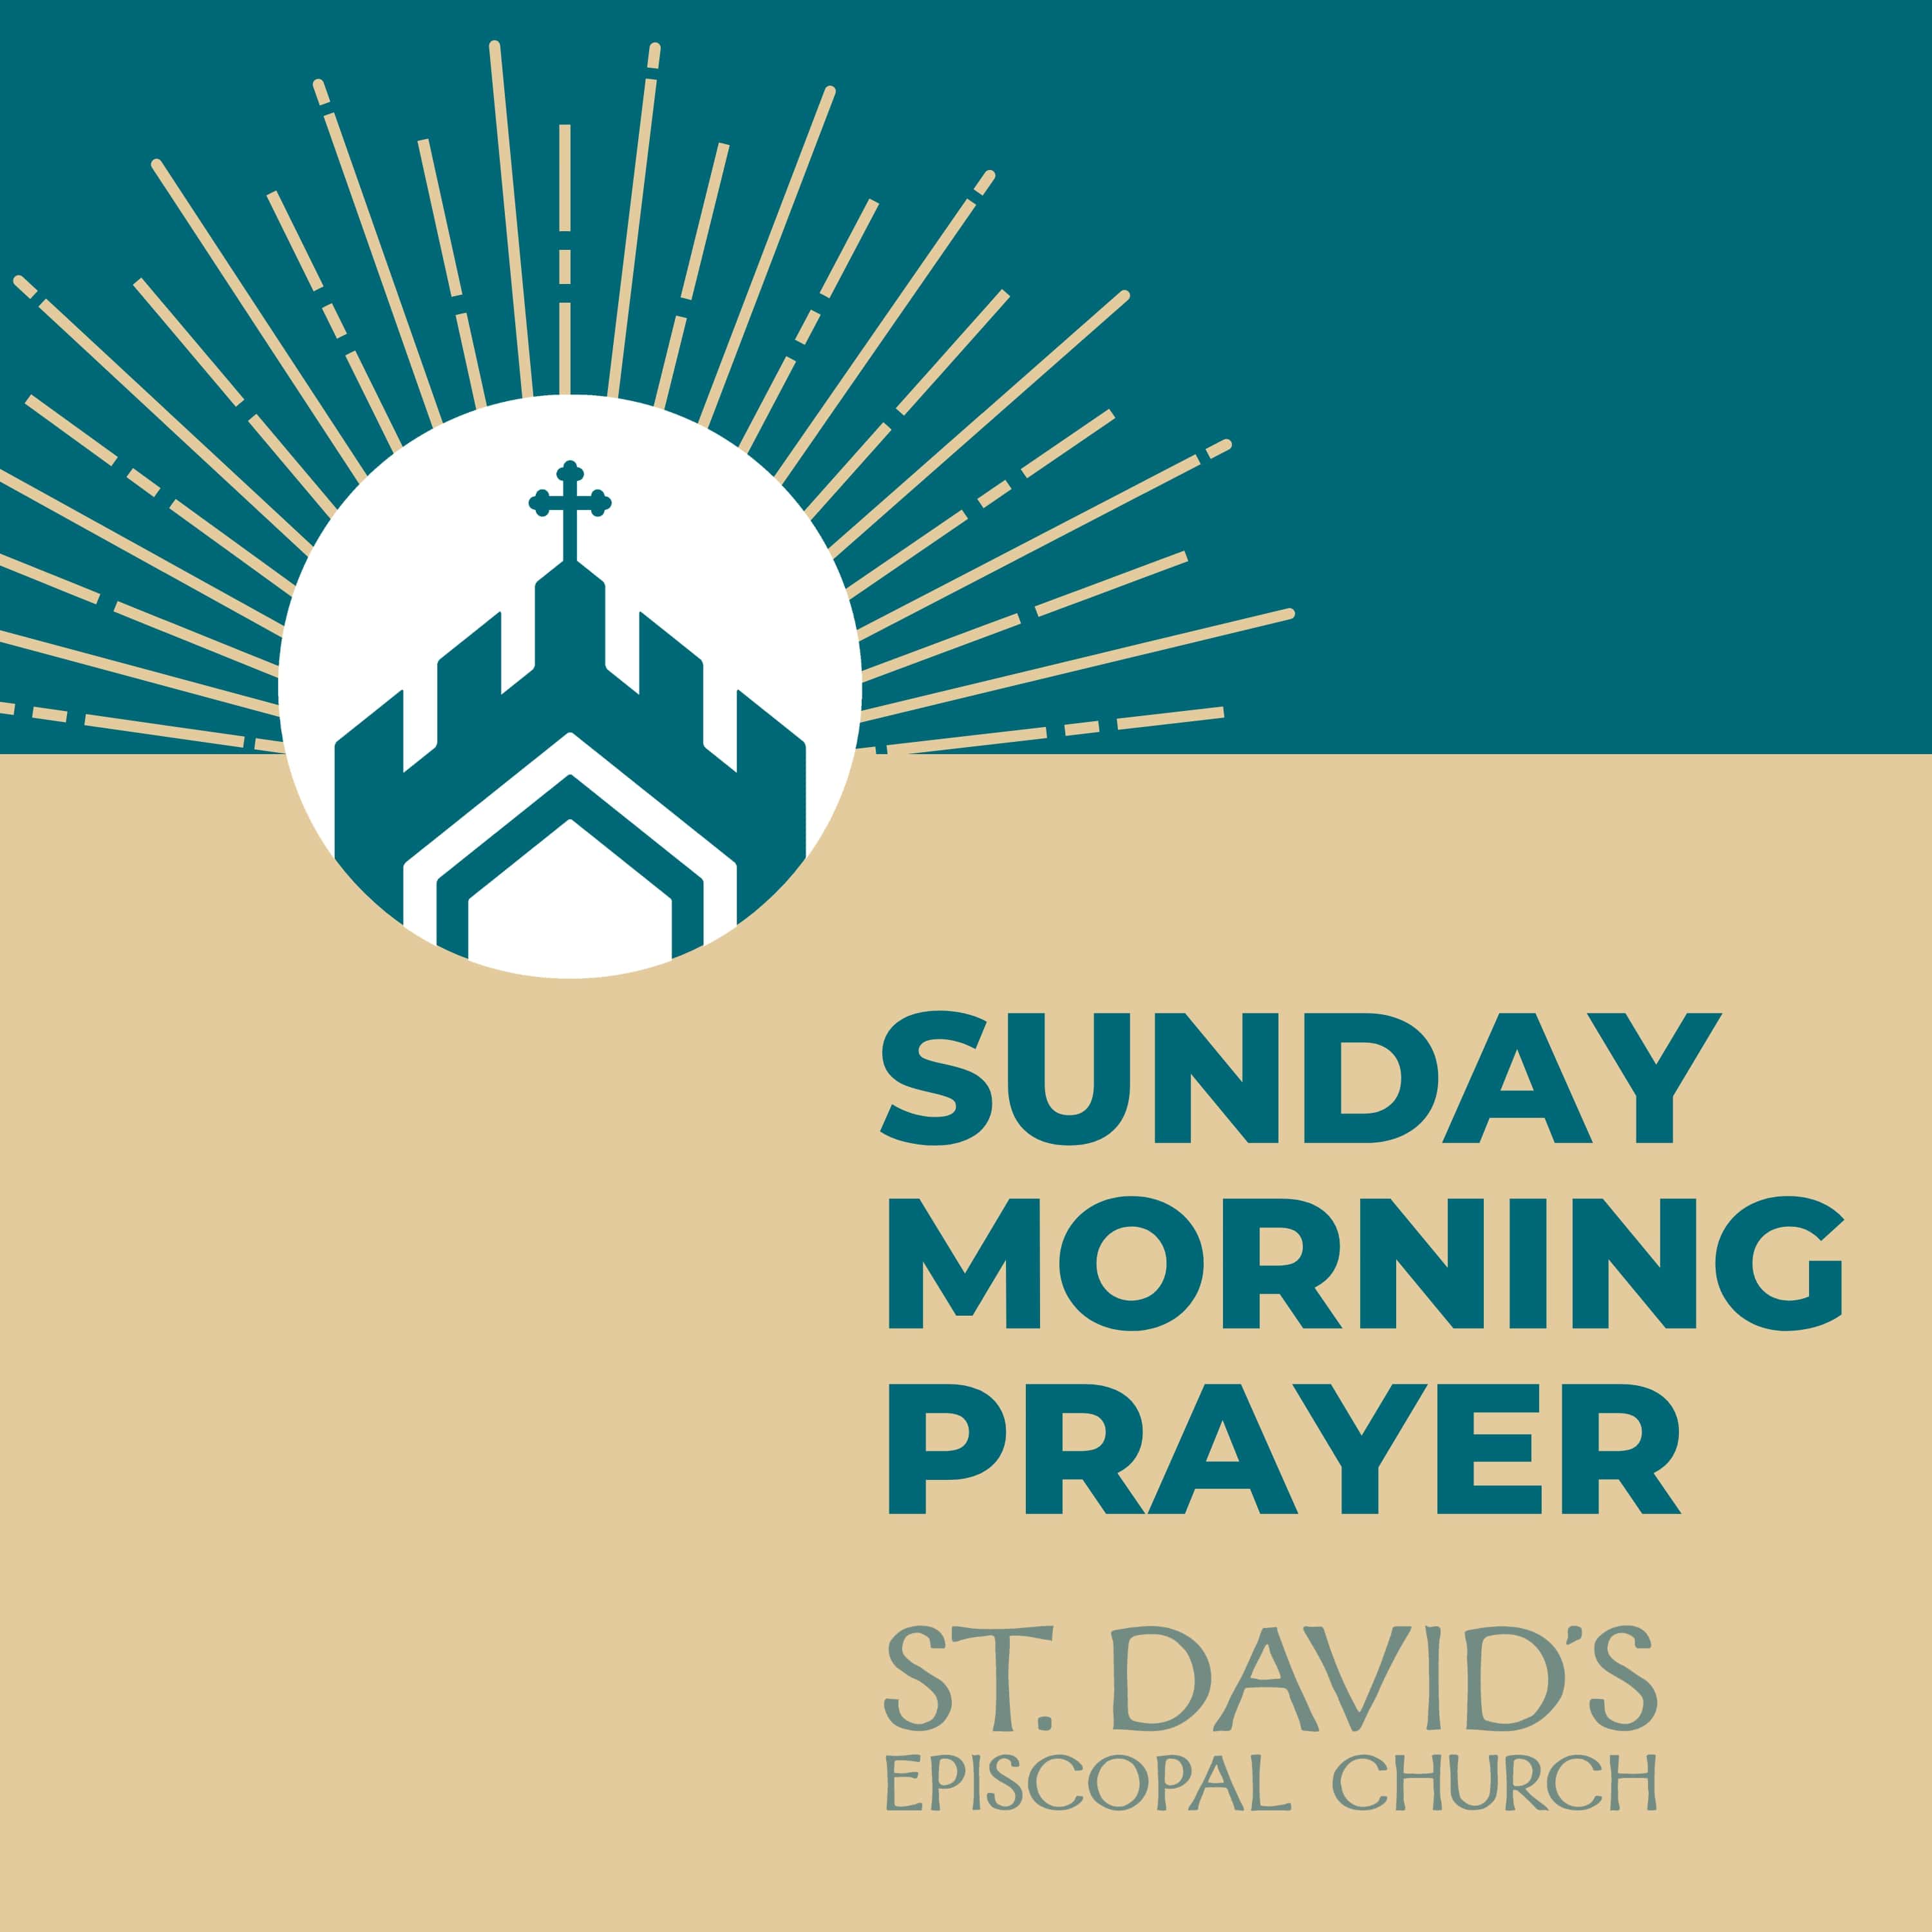 Sunday Morning Prayer: Rite Two, Year 2, 5th Sunday after Pentecost